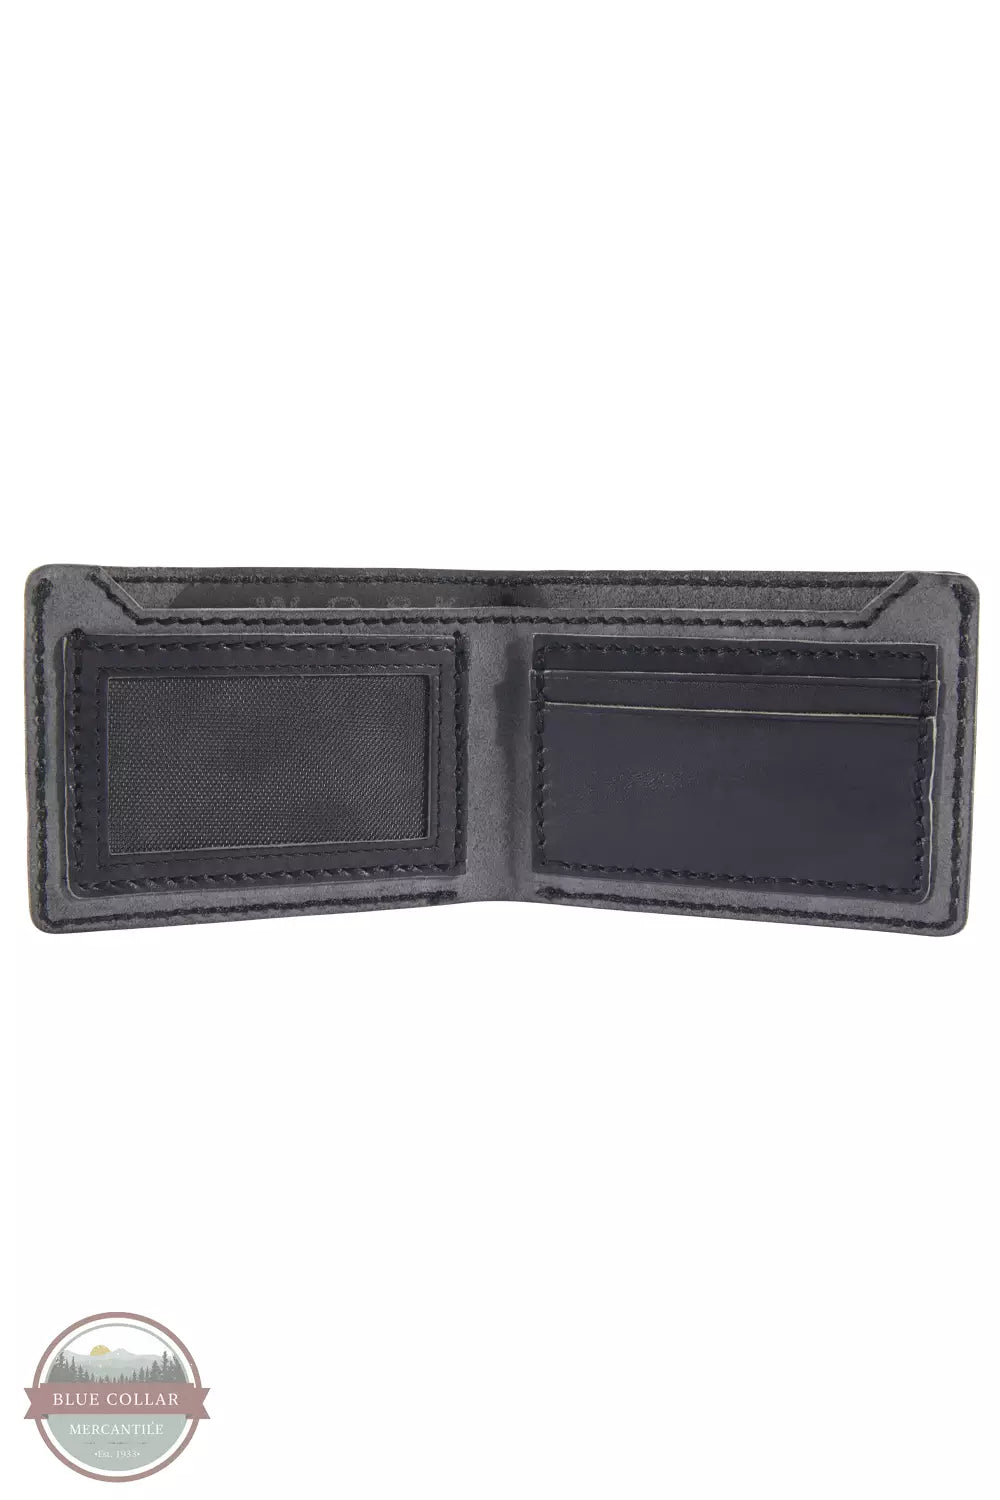 Carhartt B0000400 Patina Leather Bi-Fold Wallet Black Inside View